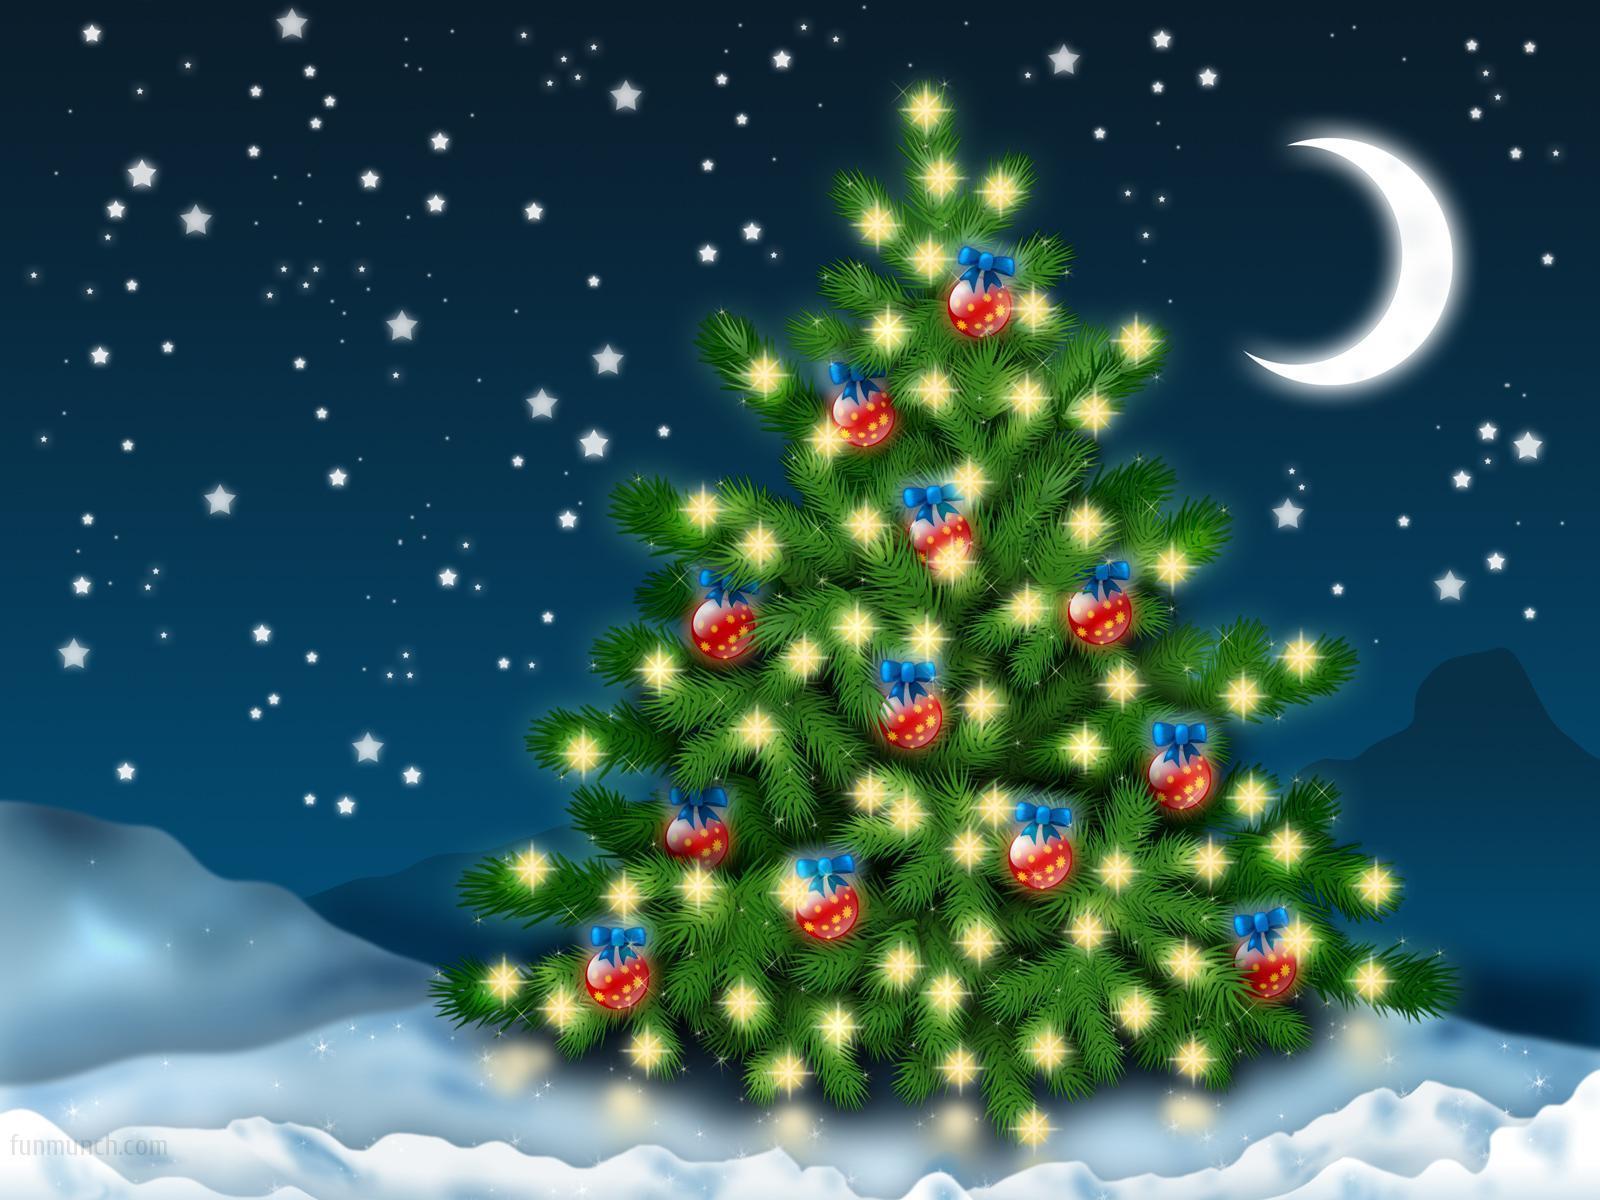 All of the Lights Wallpaper. Christmas Lights Wallpaper, Northern Lights Wallpaper and Holiday Lights Wallpaper